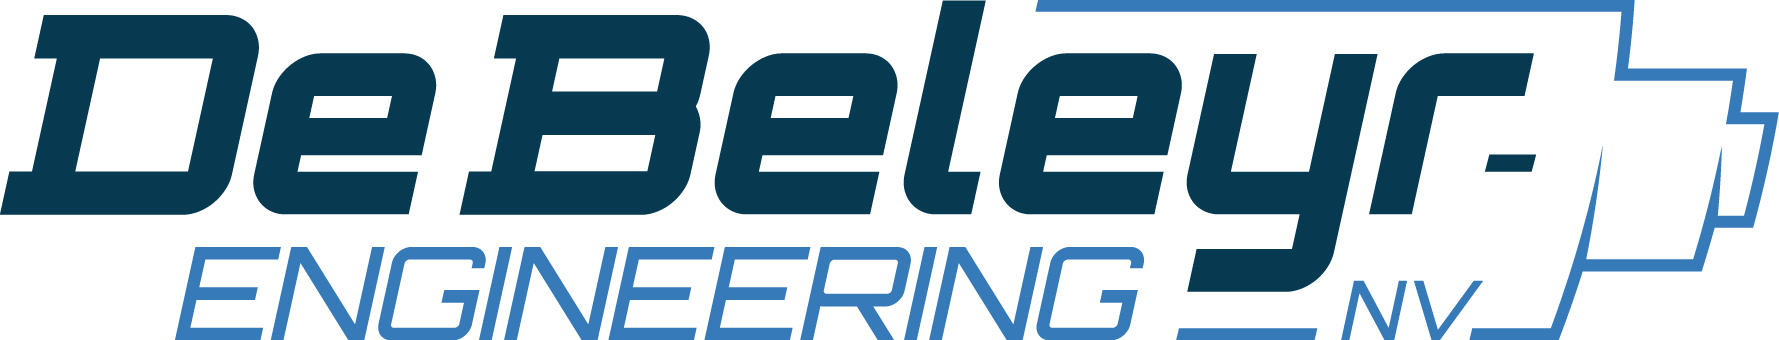 DeBeleyrEngineering-logo-rgb-300dpi